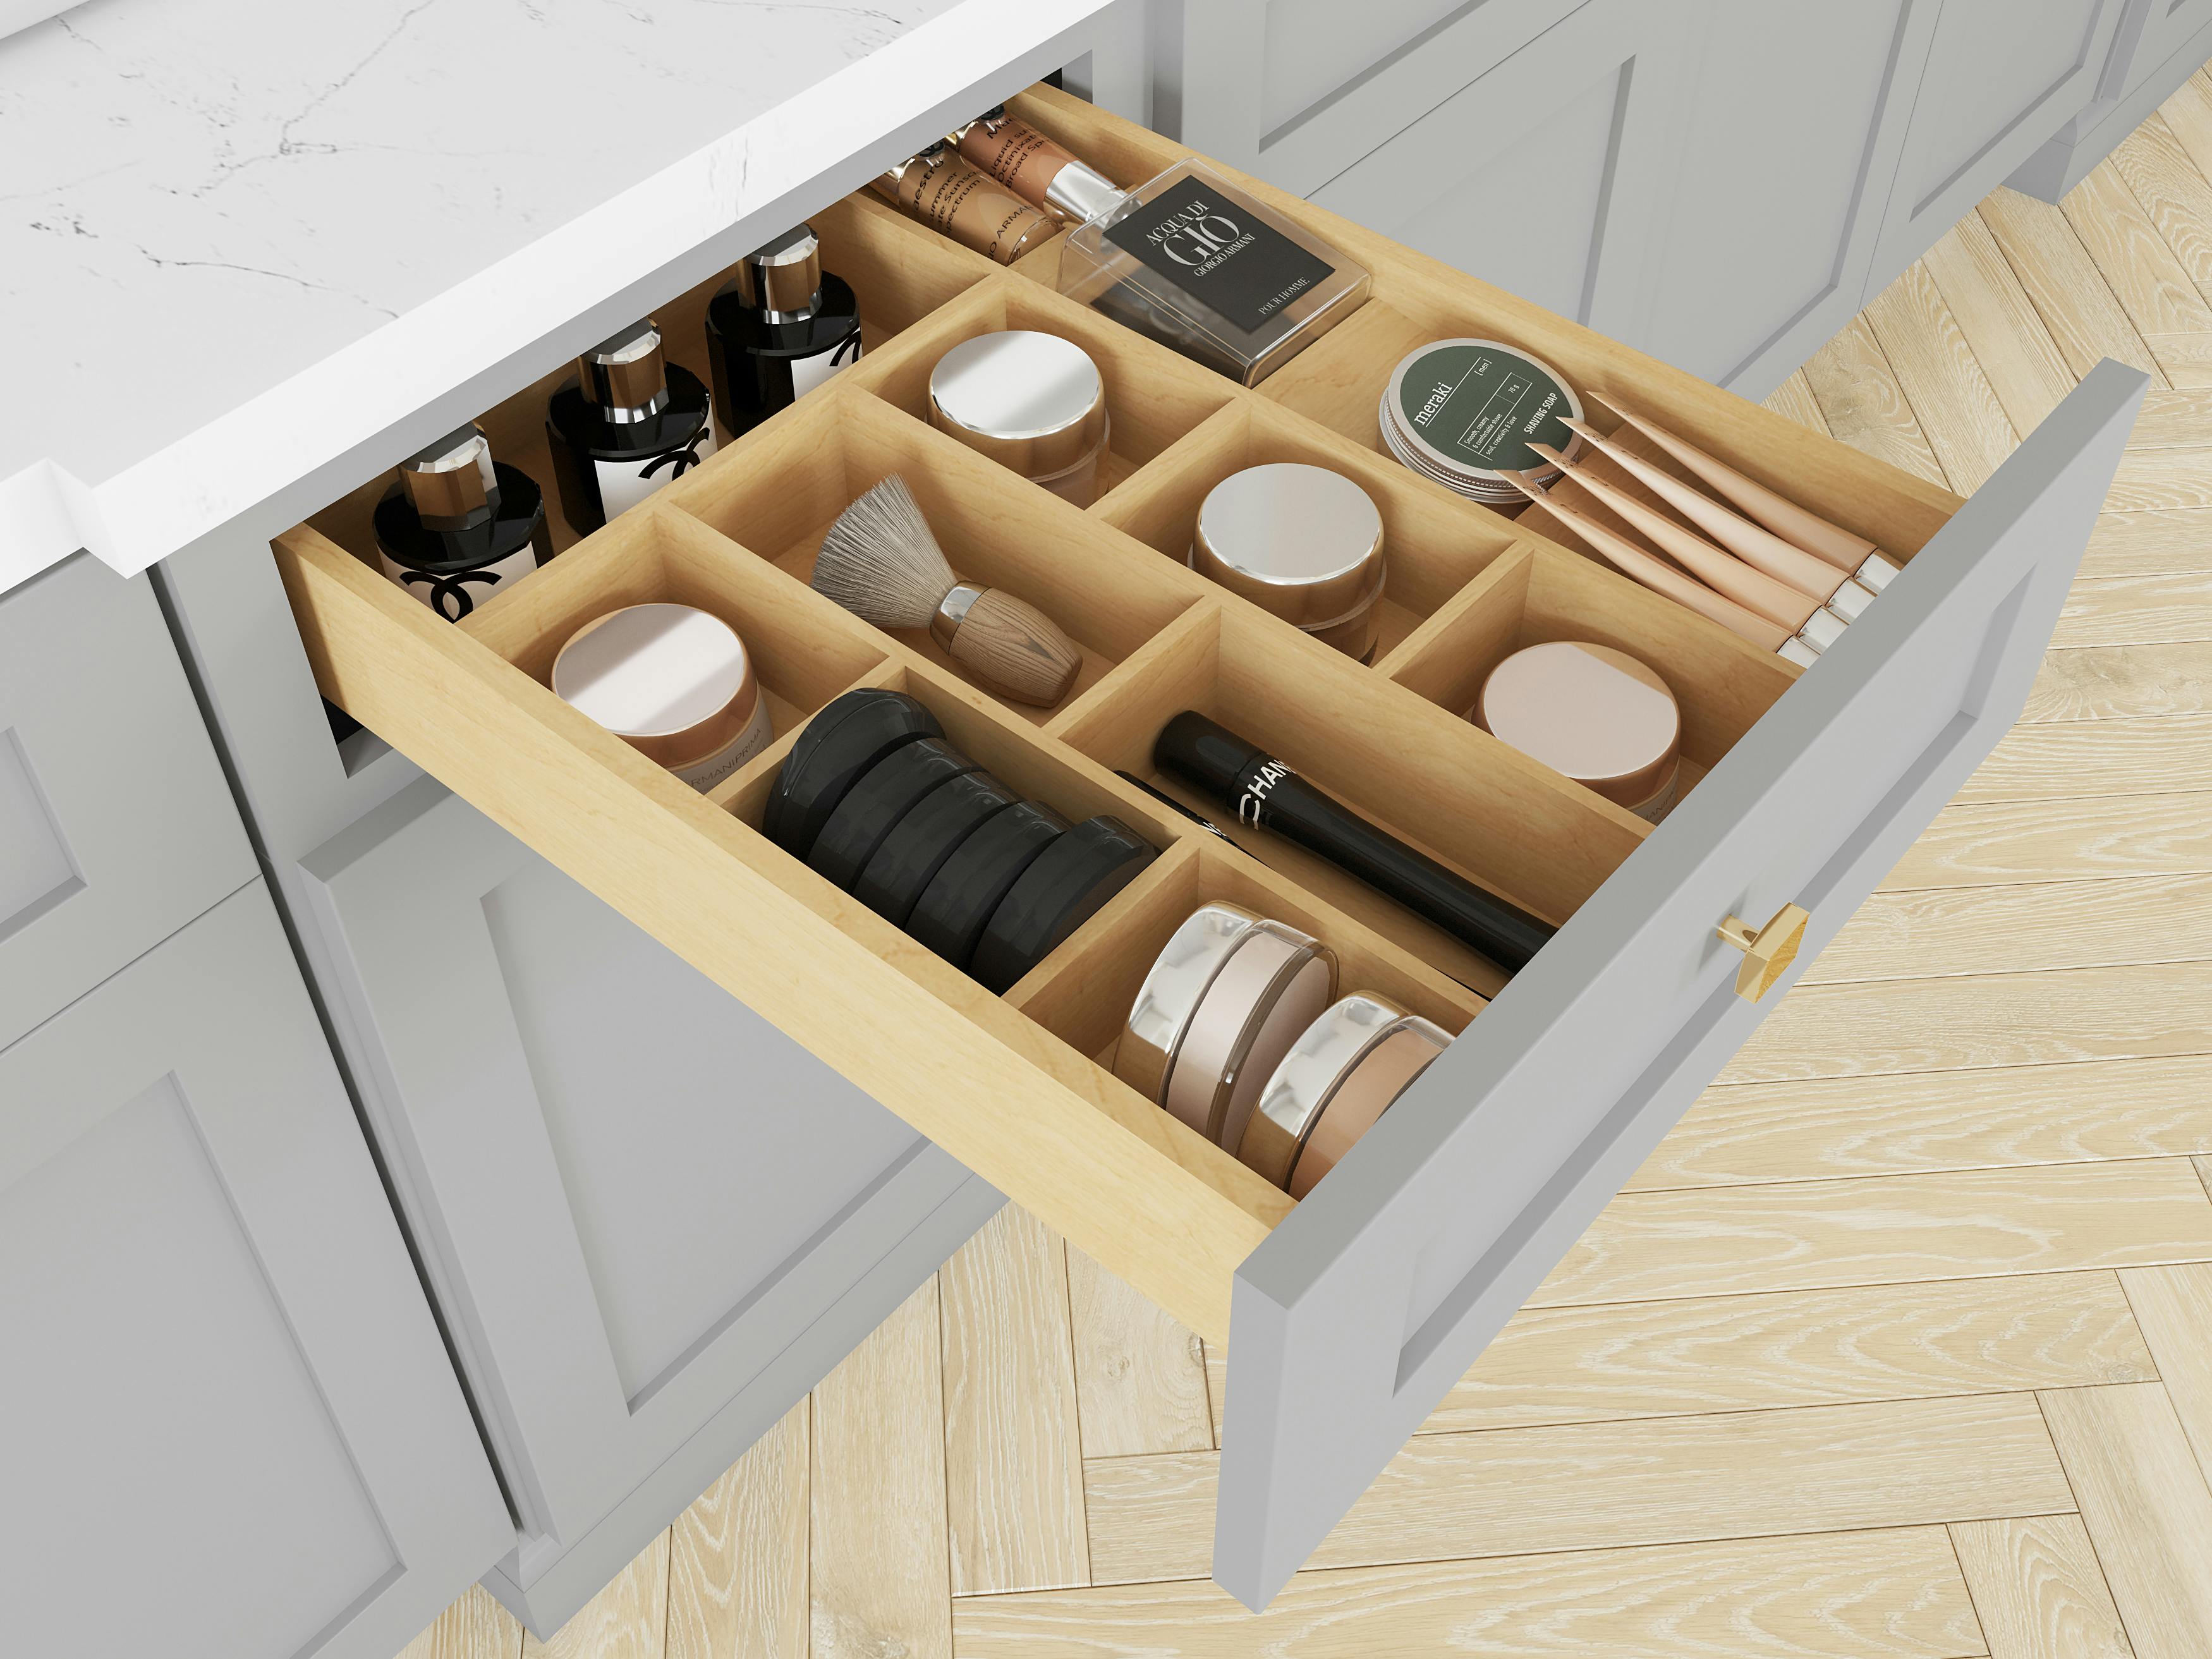 Fabuwood's knife and cutlery drawer organization